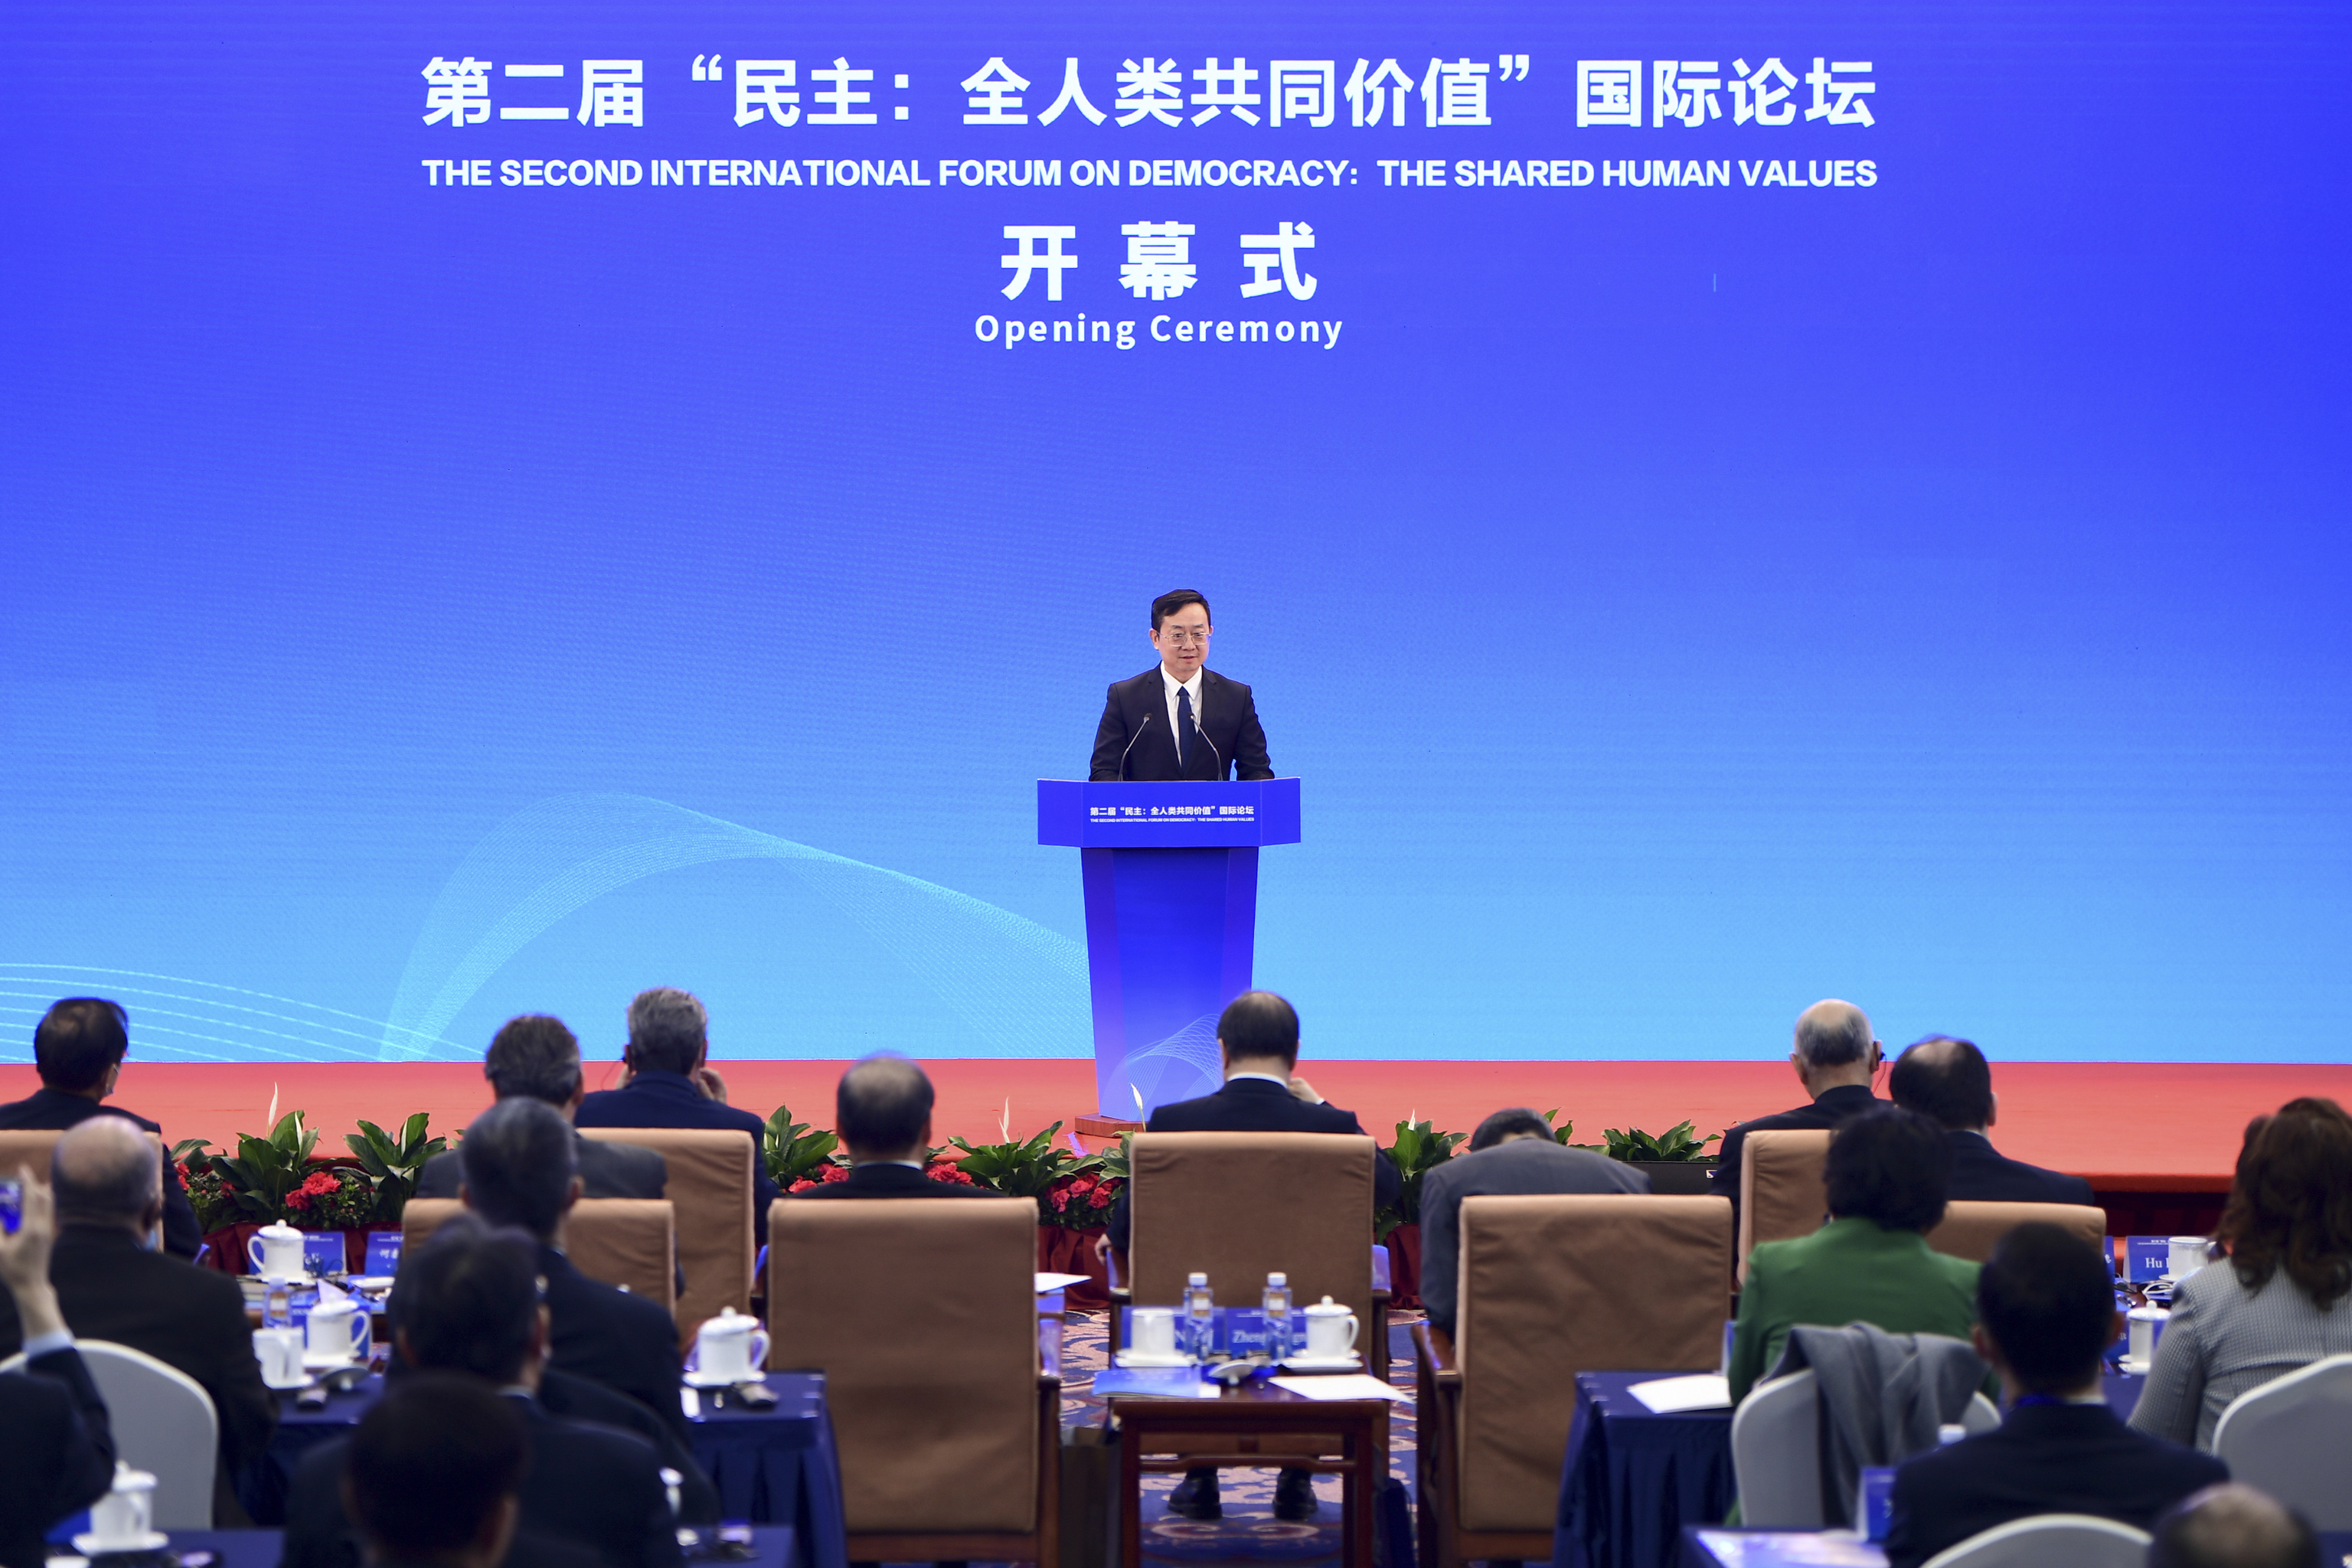 Acto de apertura del foro celebrado en Pekín.